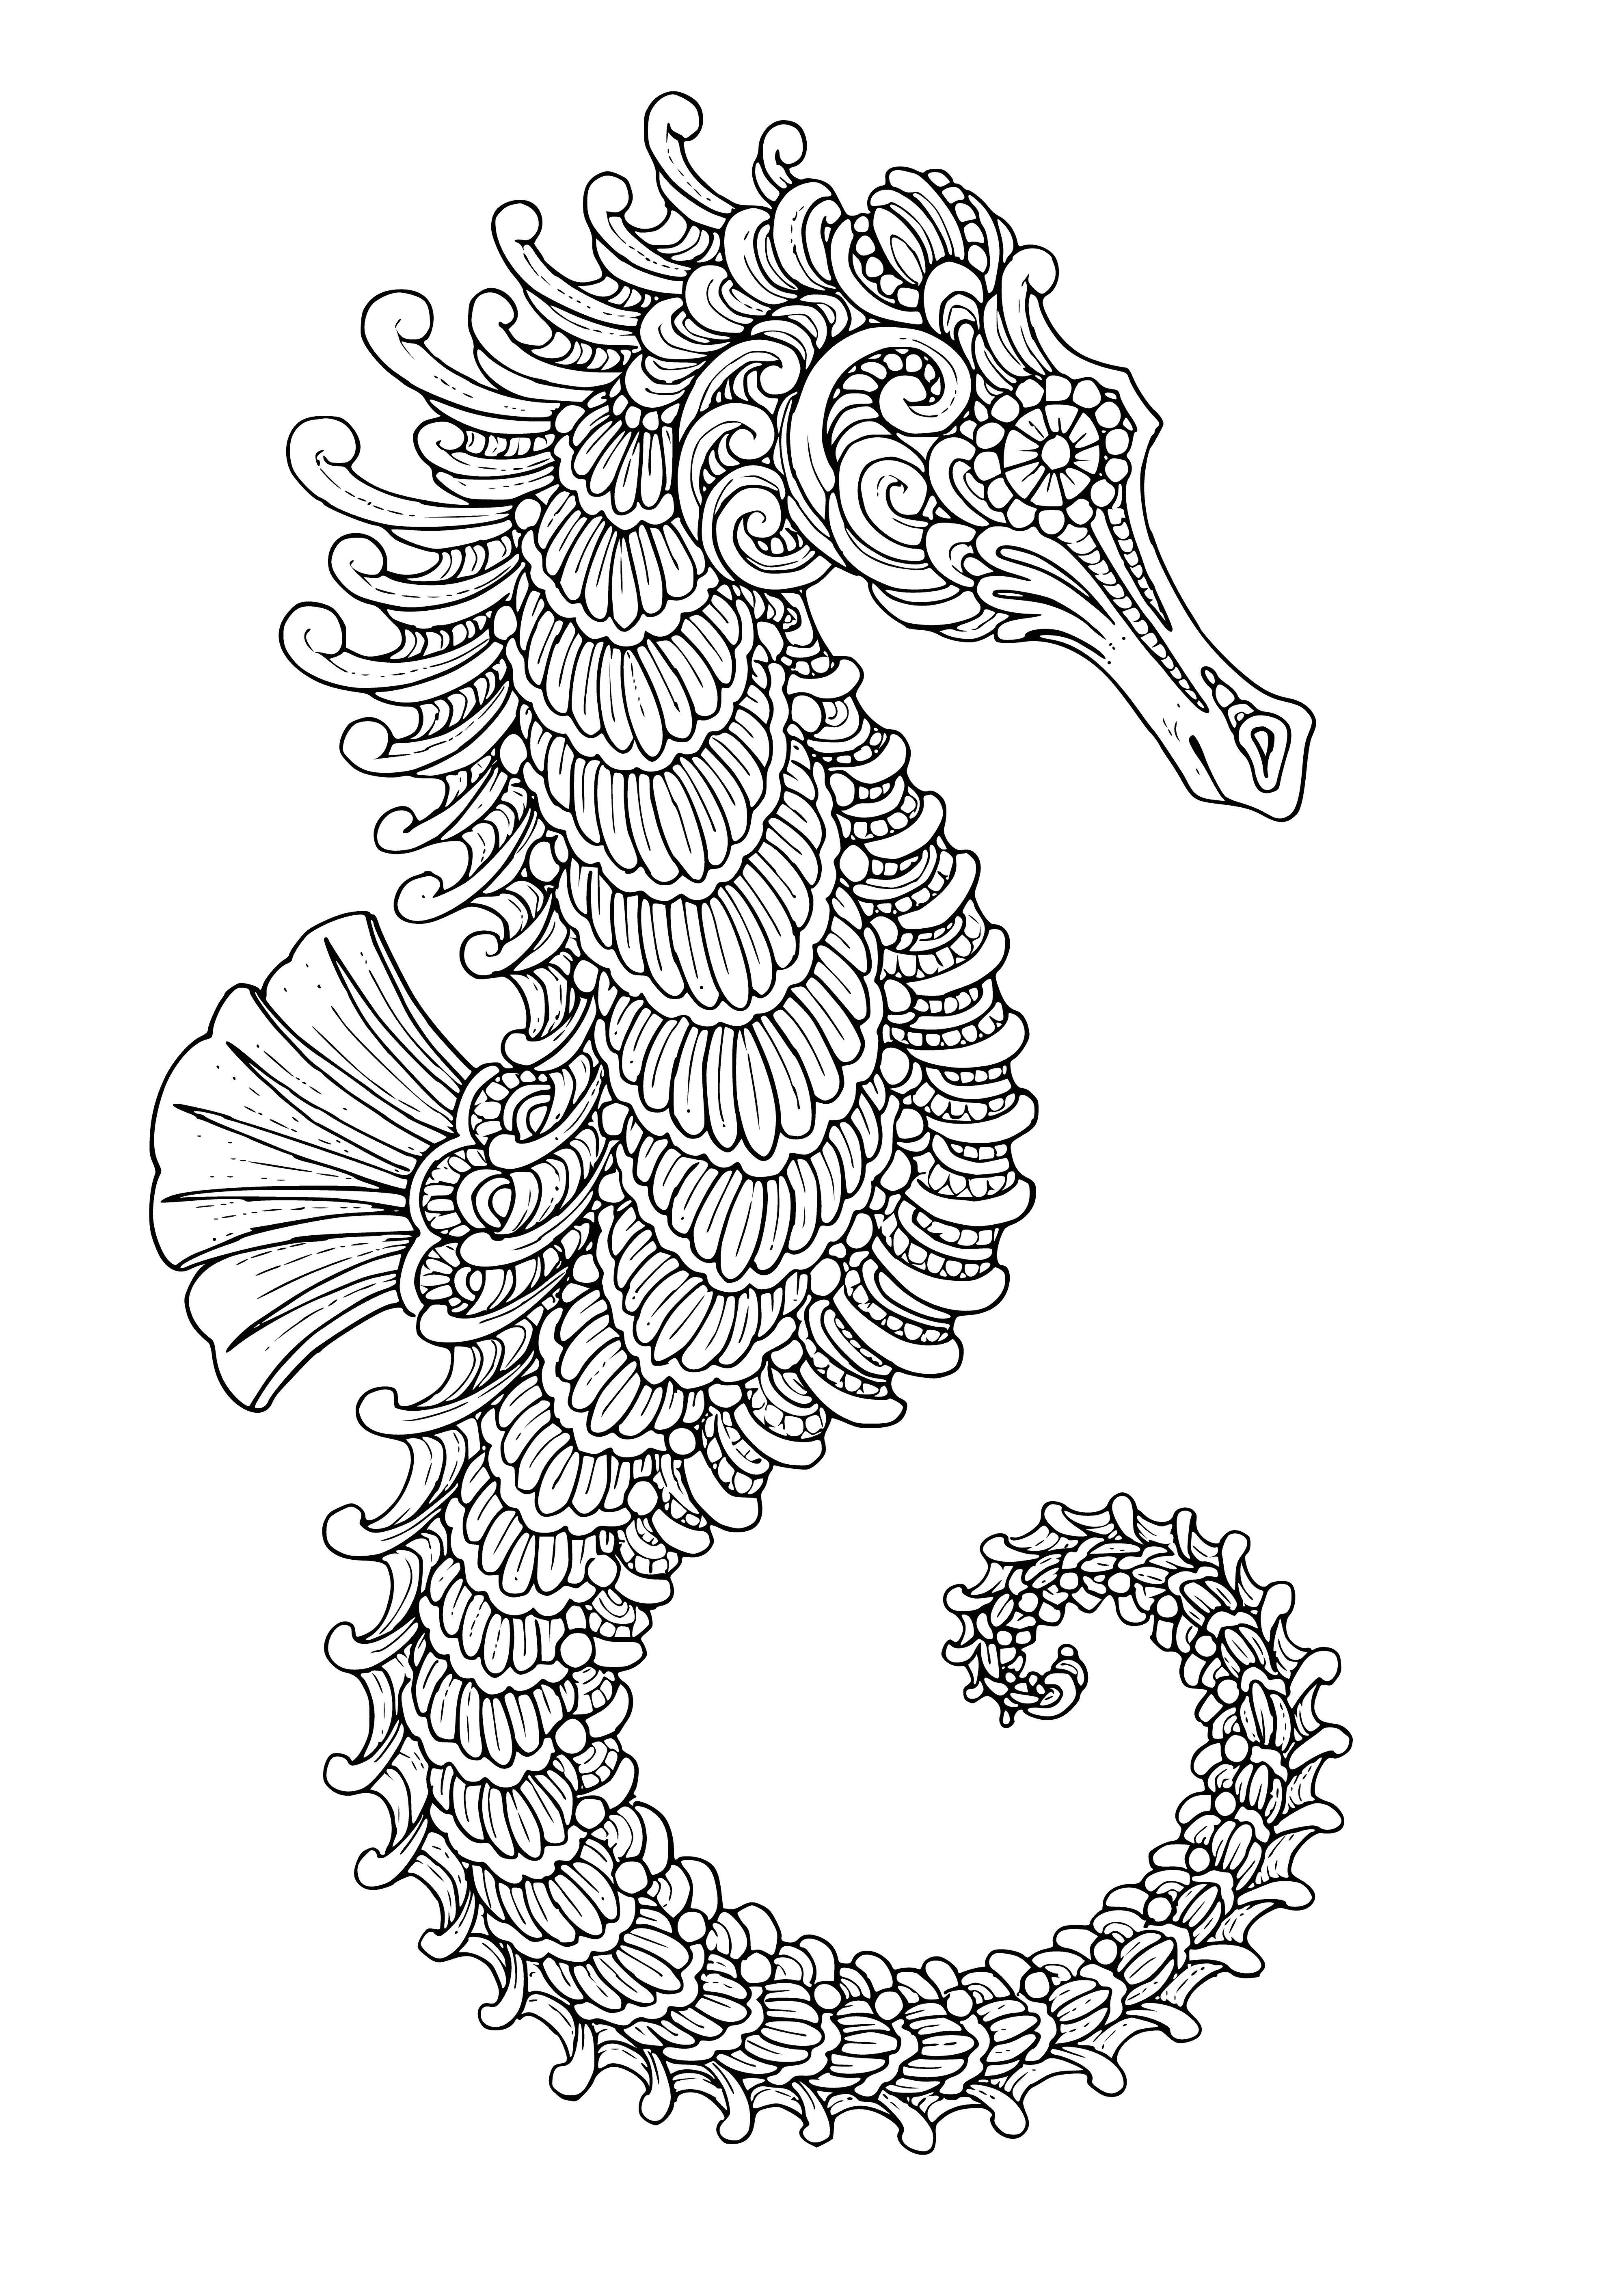 Sea Horse coloring page